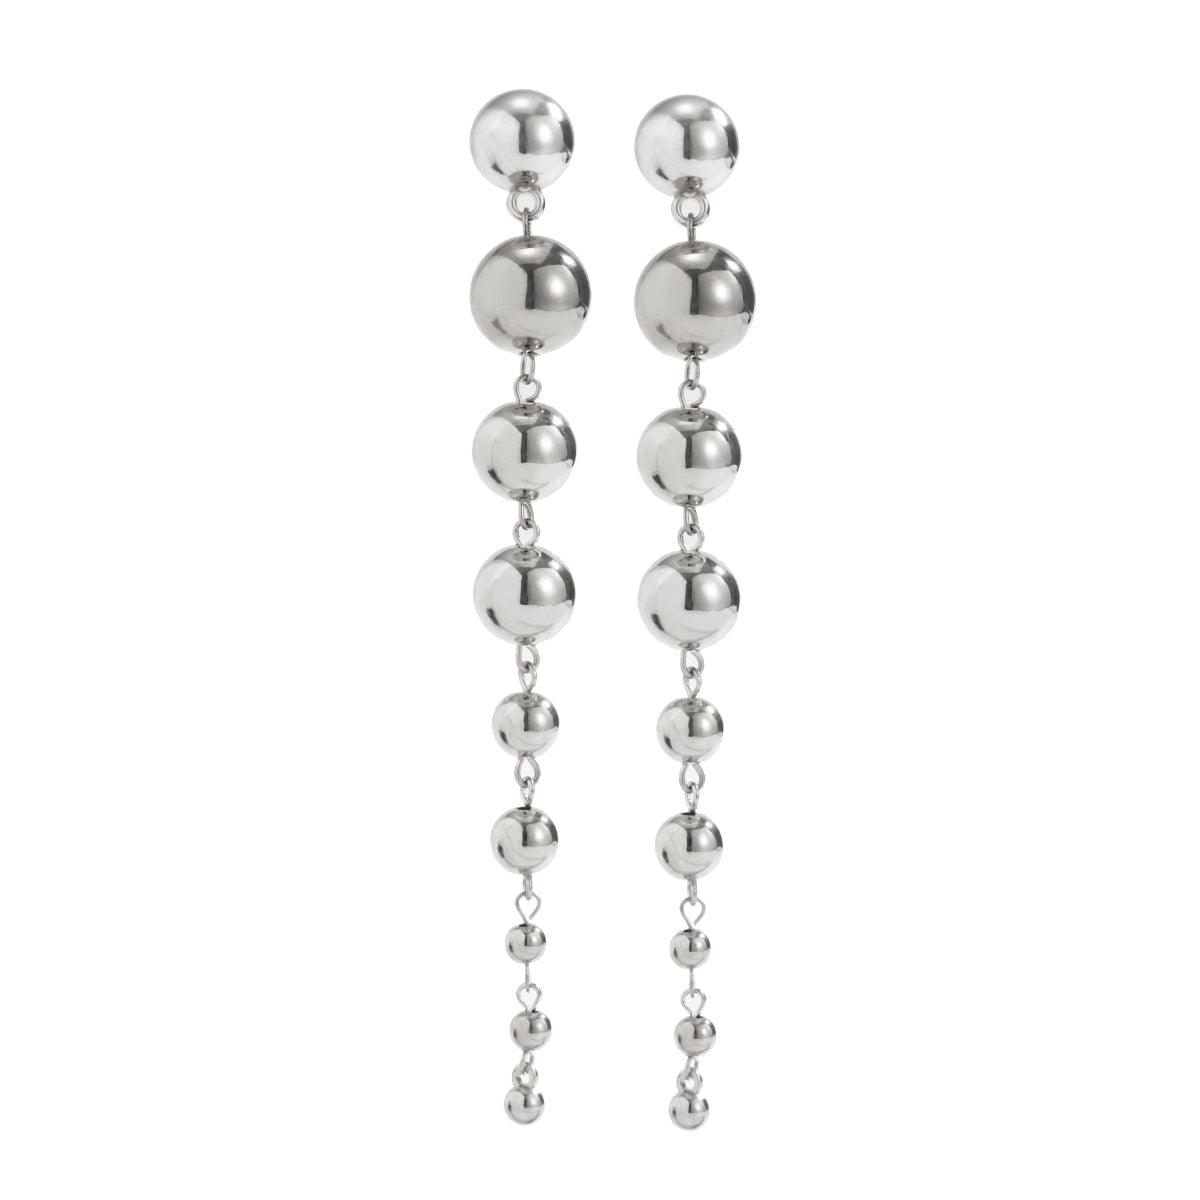 Long Dangle Beads Earrings from The House of CO-KY - Earrings